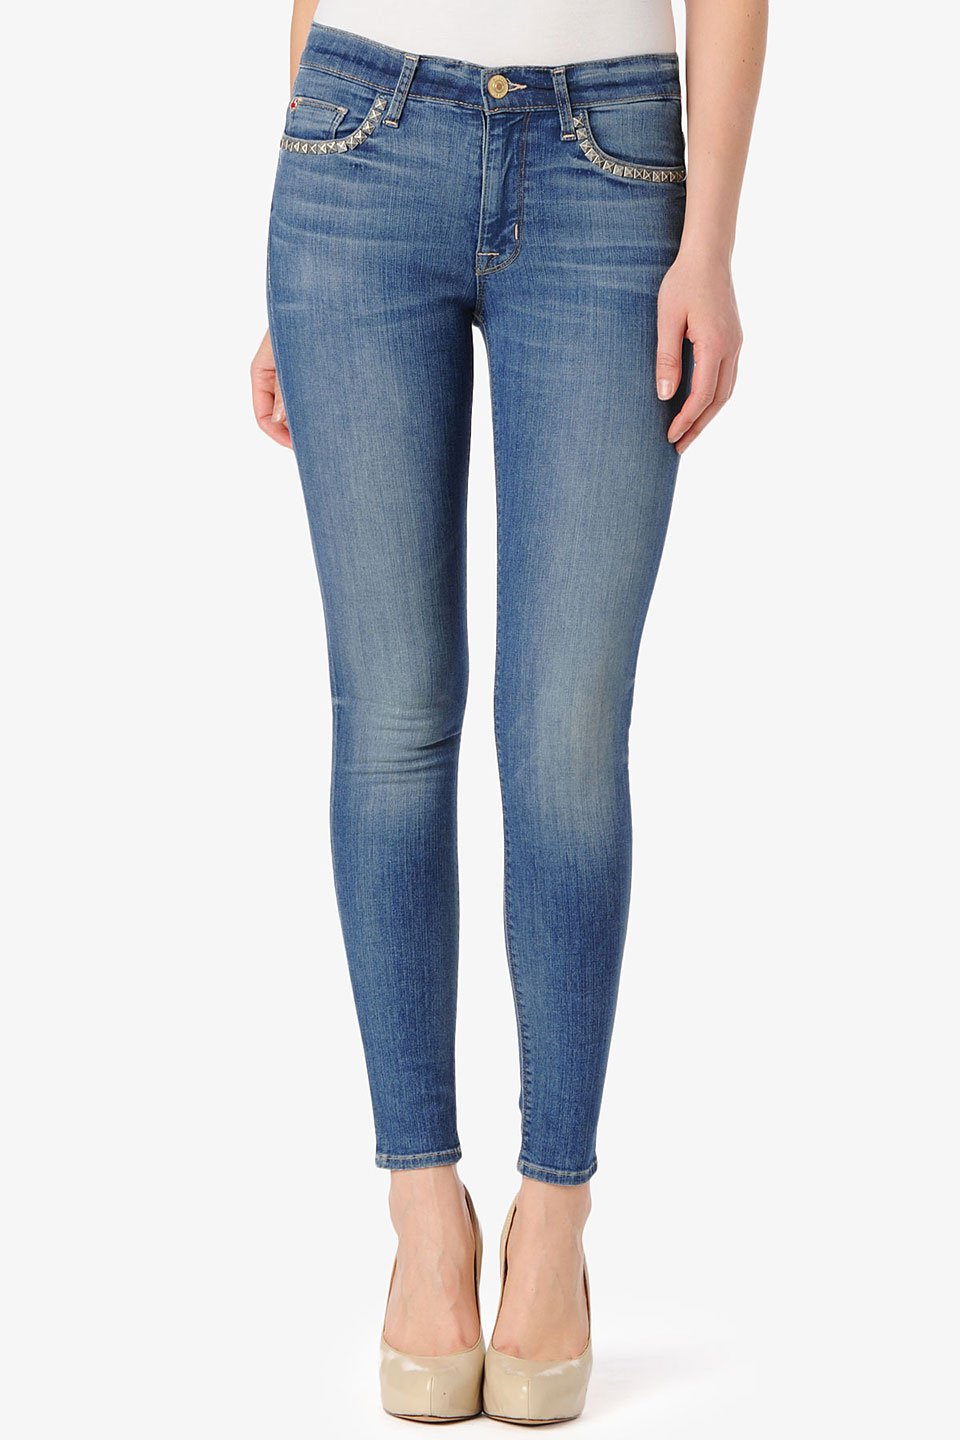 Lyst - Hudson jeans Nico Midrise Super Skinny in Blue